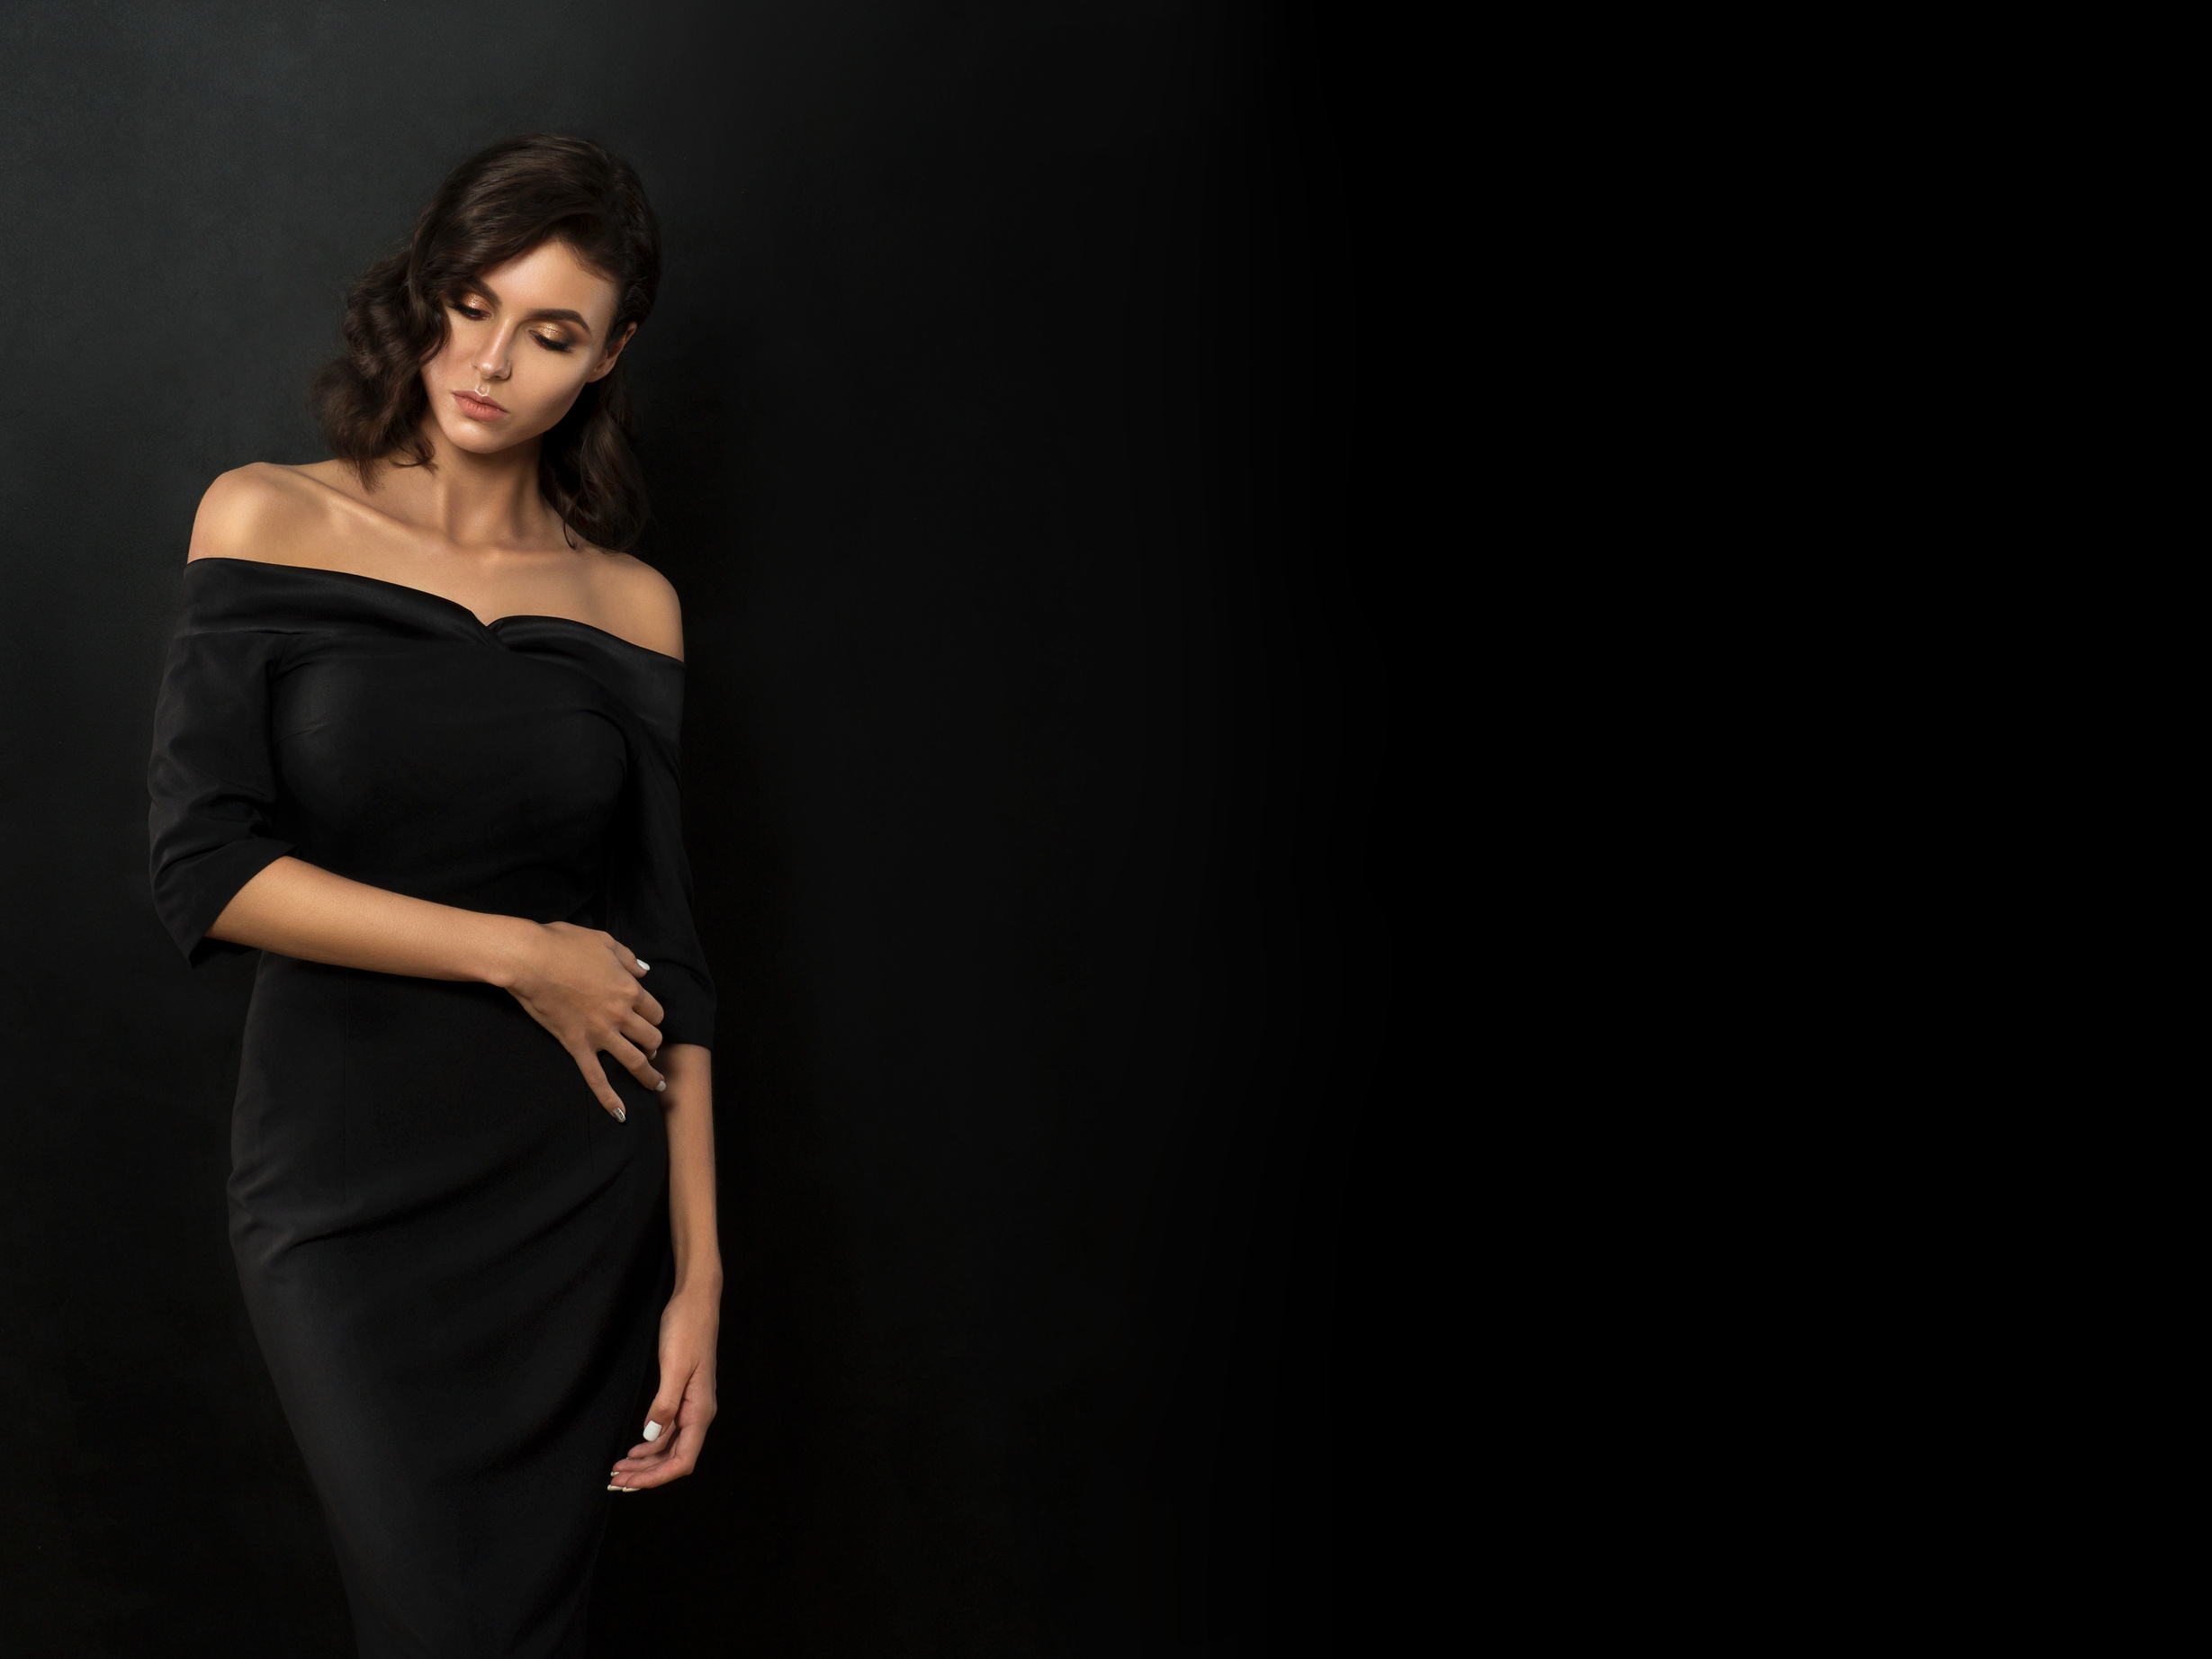 Woman Wearing a Black Dress on Black Background